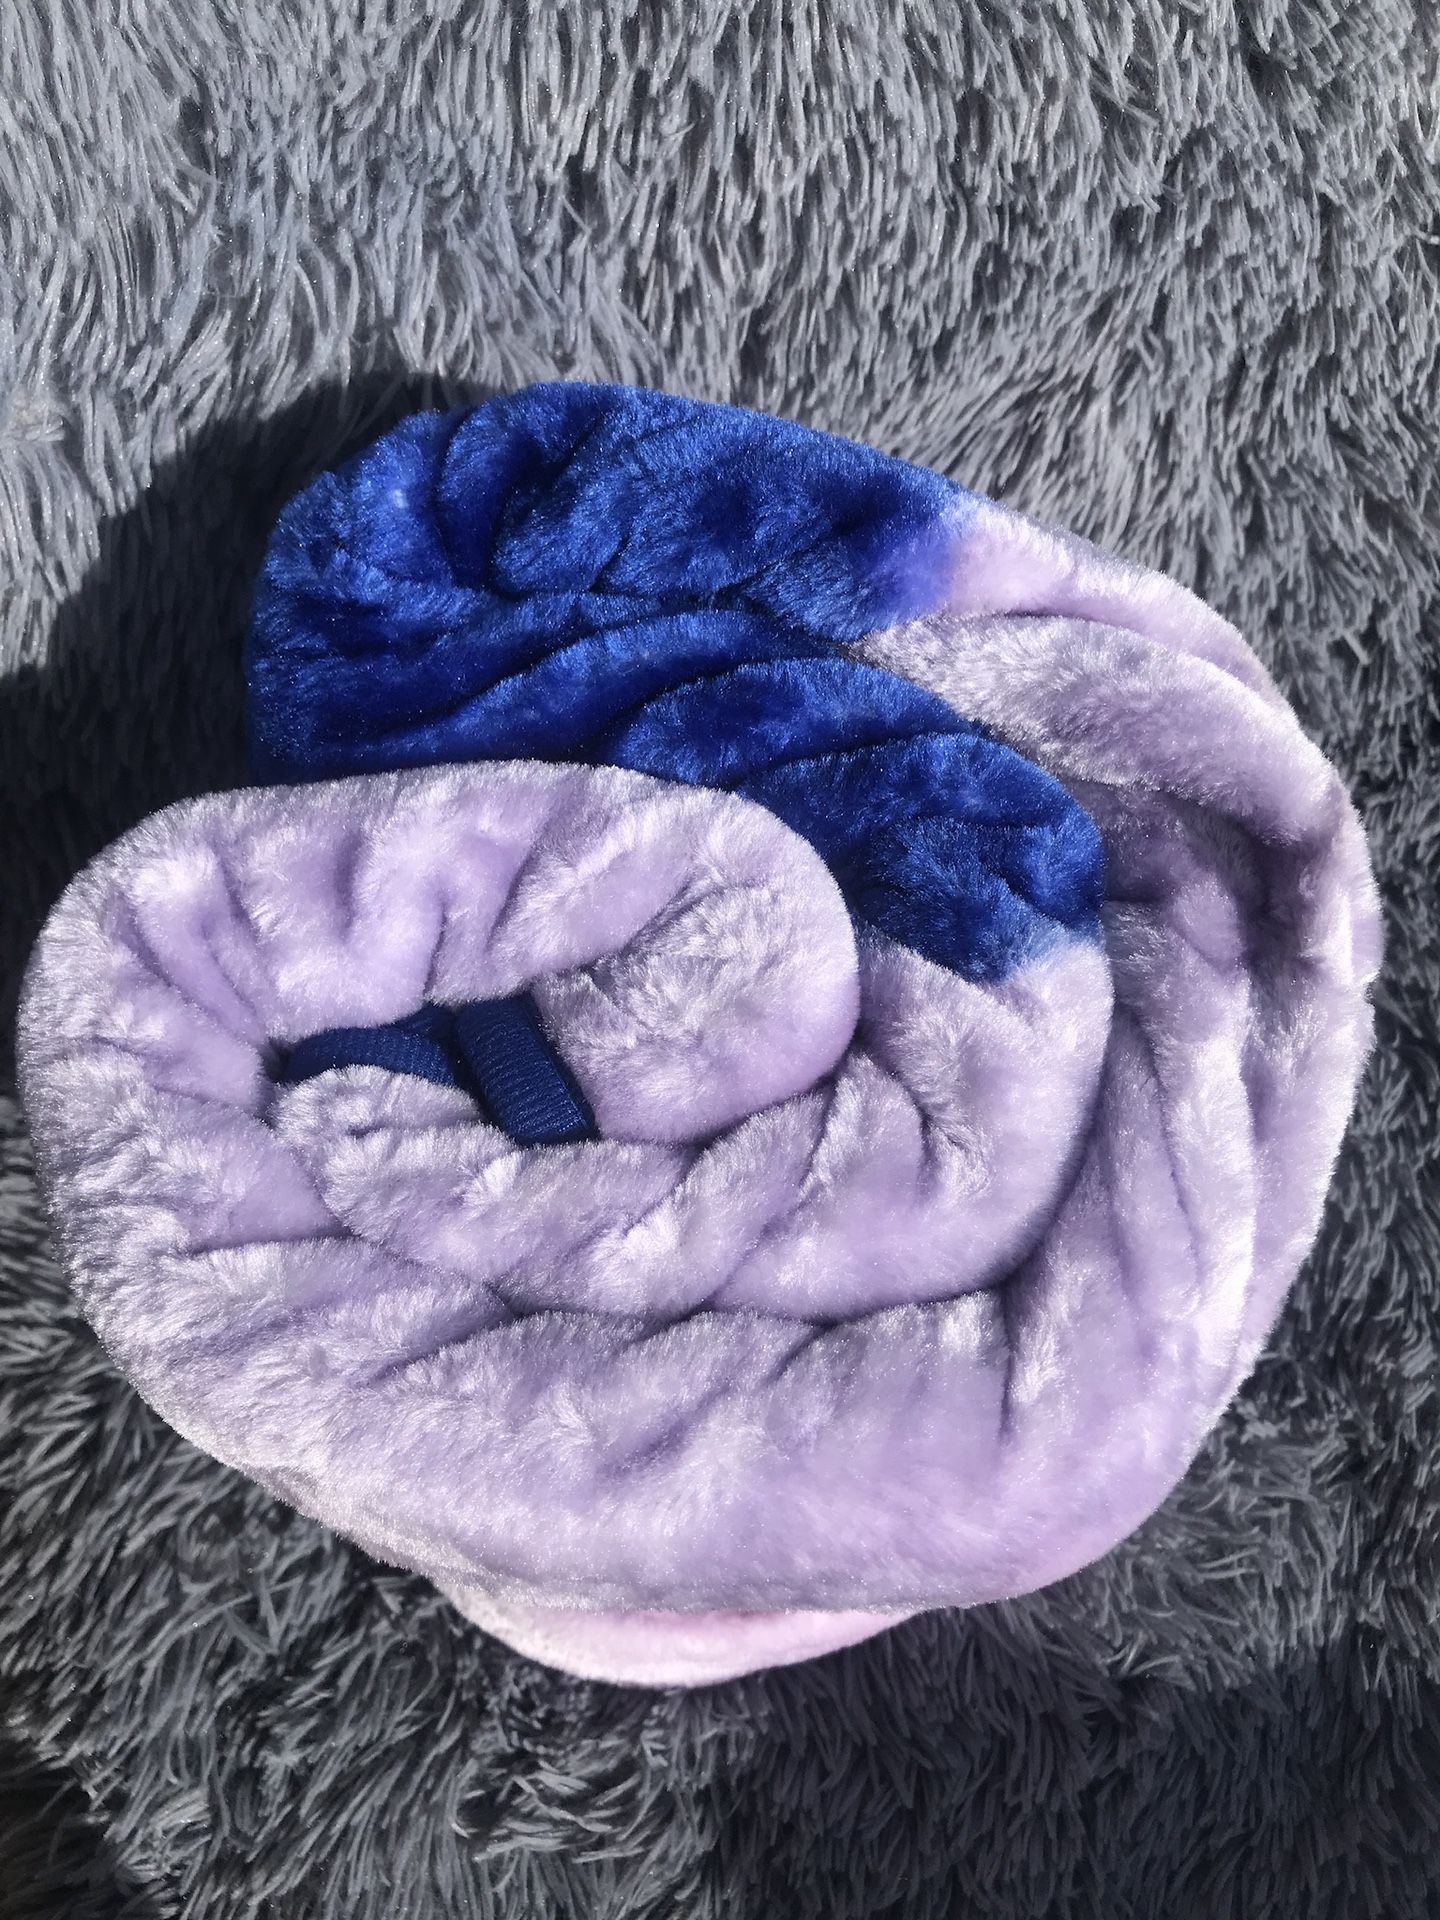 Blanket- Royal Plush Raschel Blanket Soft throw blue/ purple coyote 50" x 60" / 127x152cm -Wolf image New!!